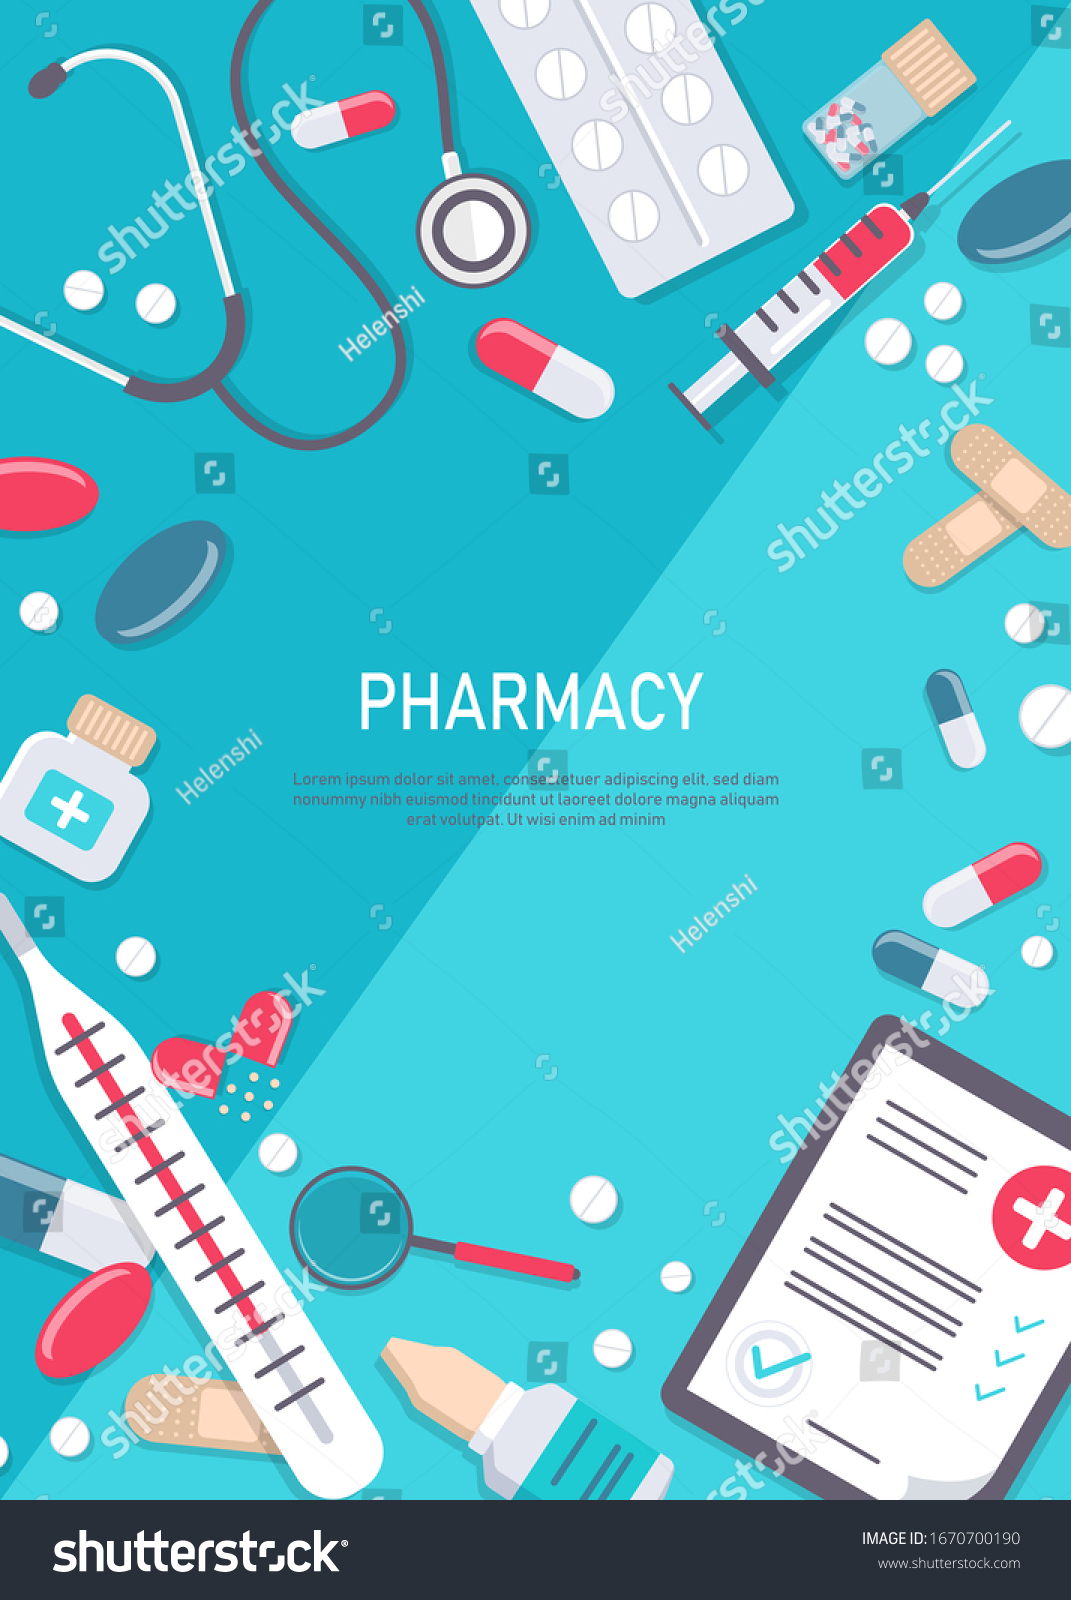 Medicine Vector Illustration Pharmacy Background Pharmacy Stock Vector ...